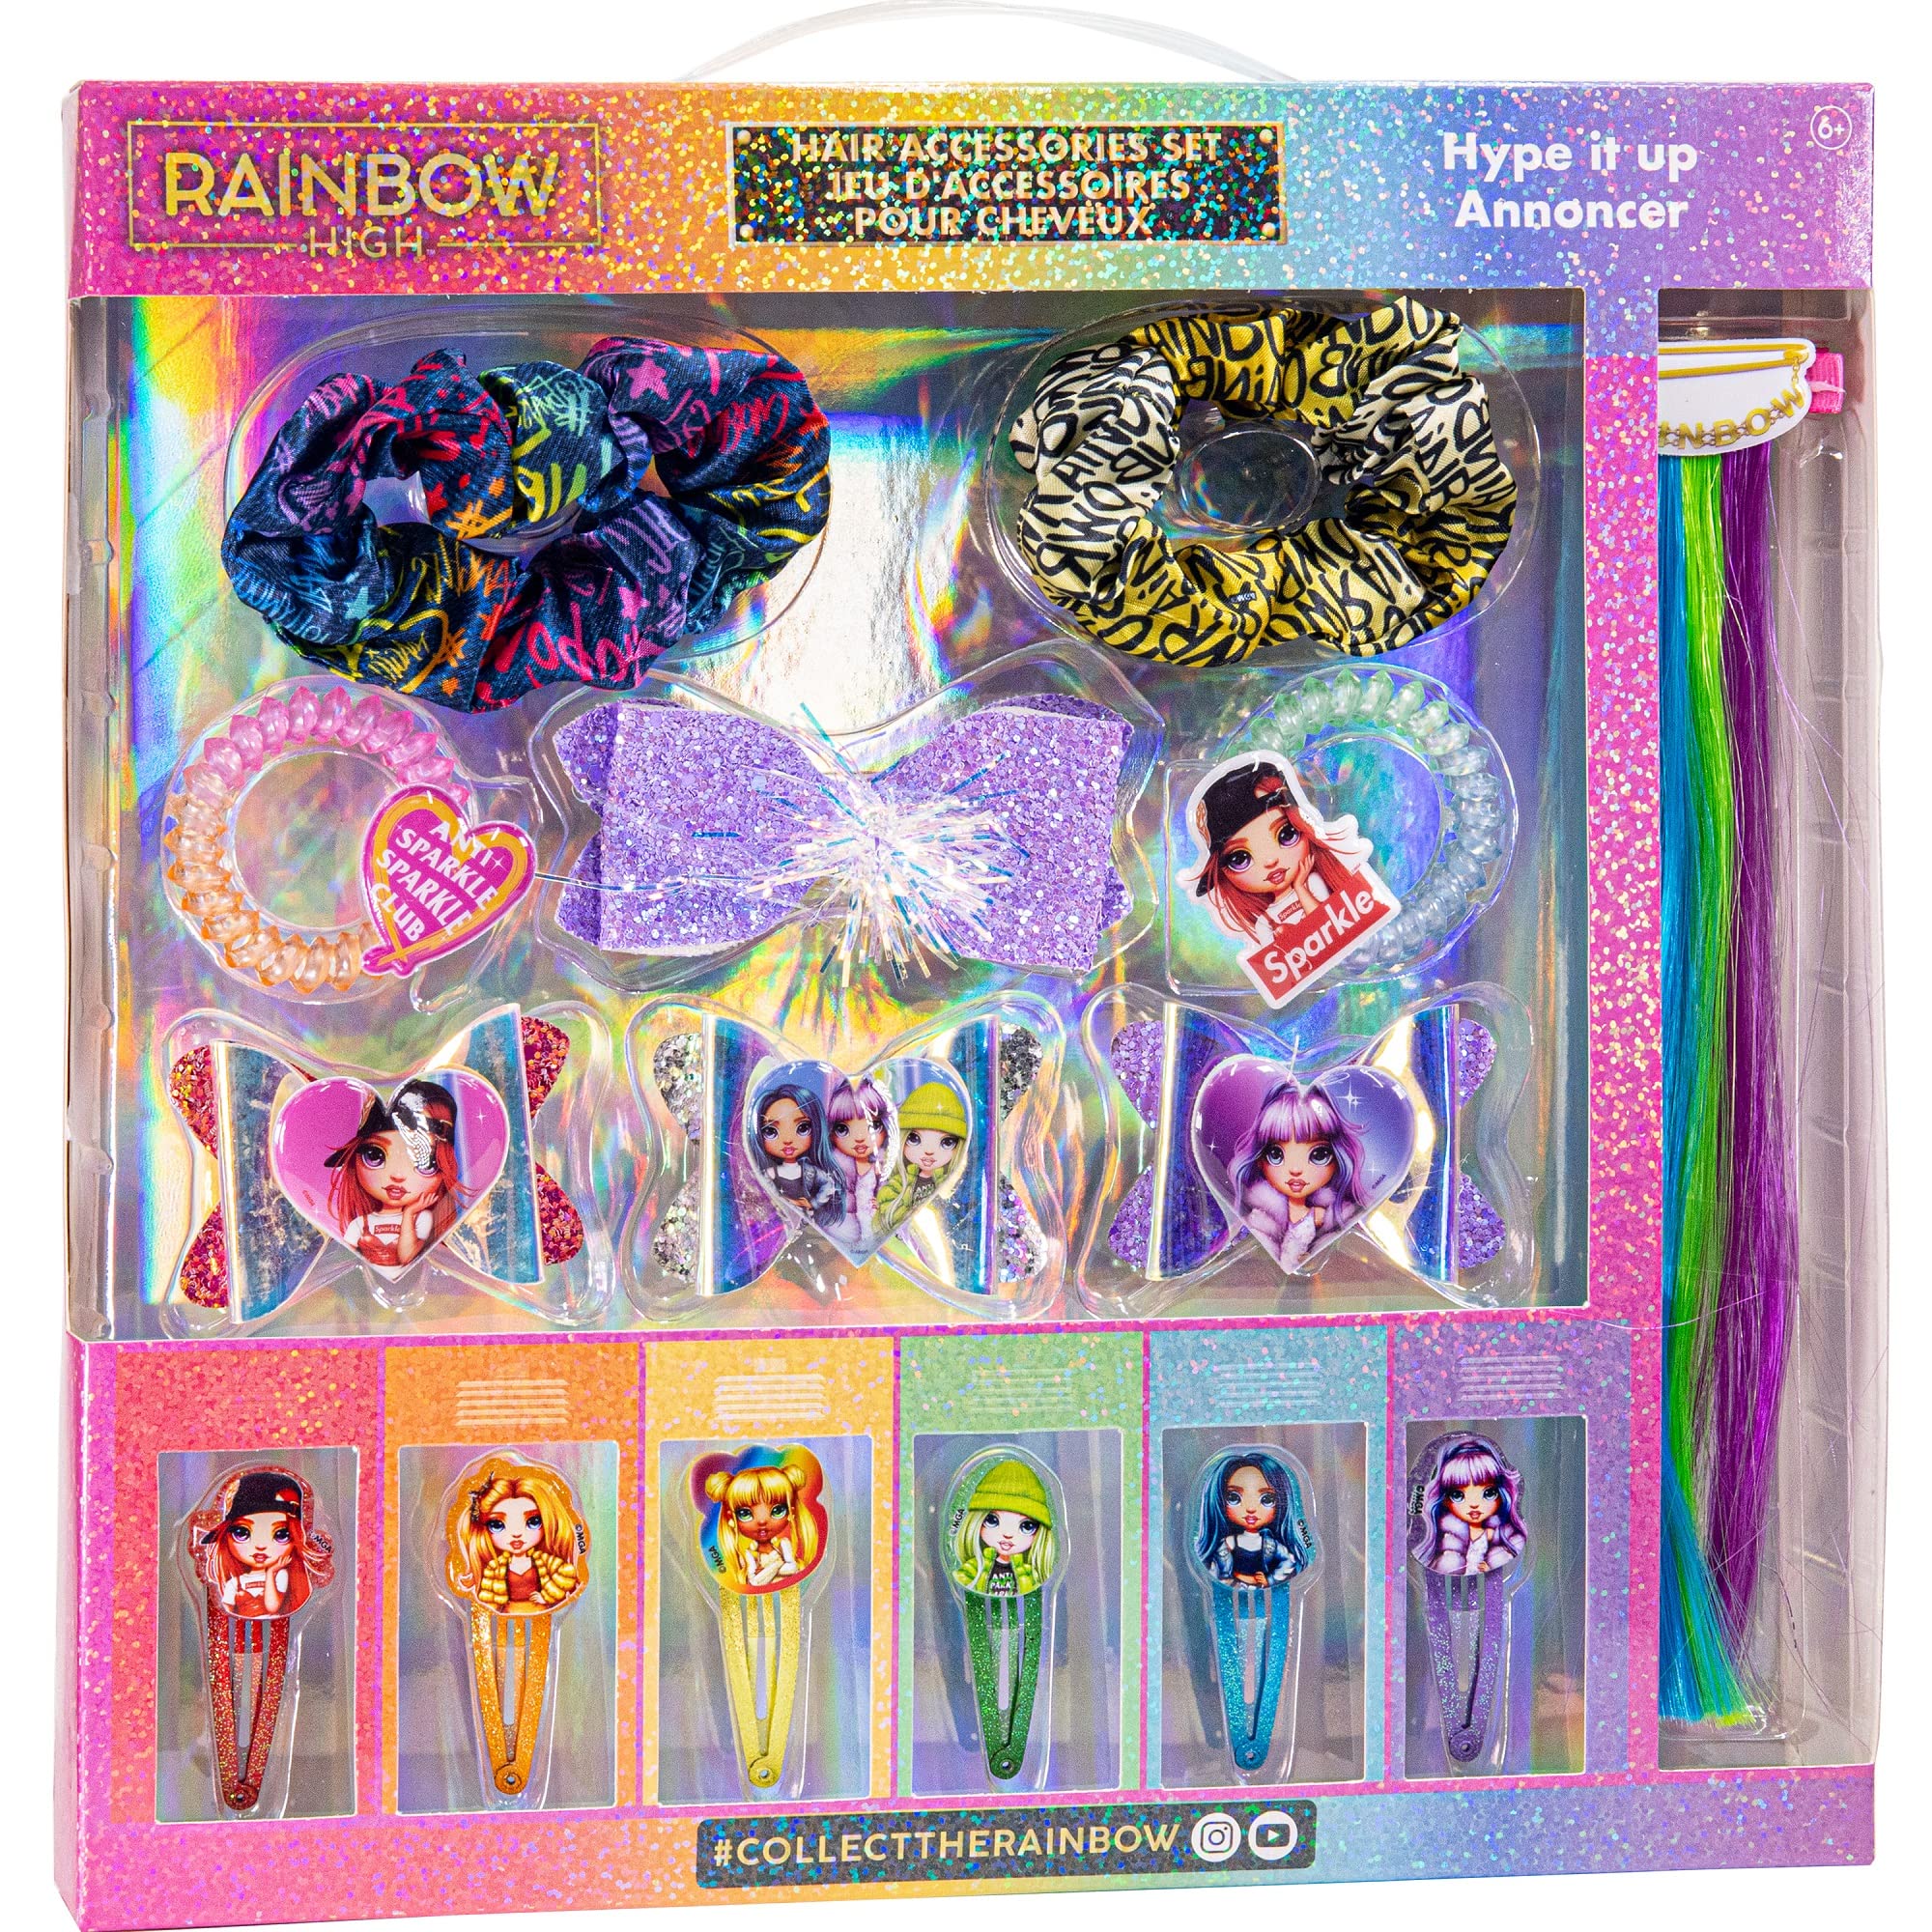 Rainbow High - Townley Girl Hair Accessories Set